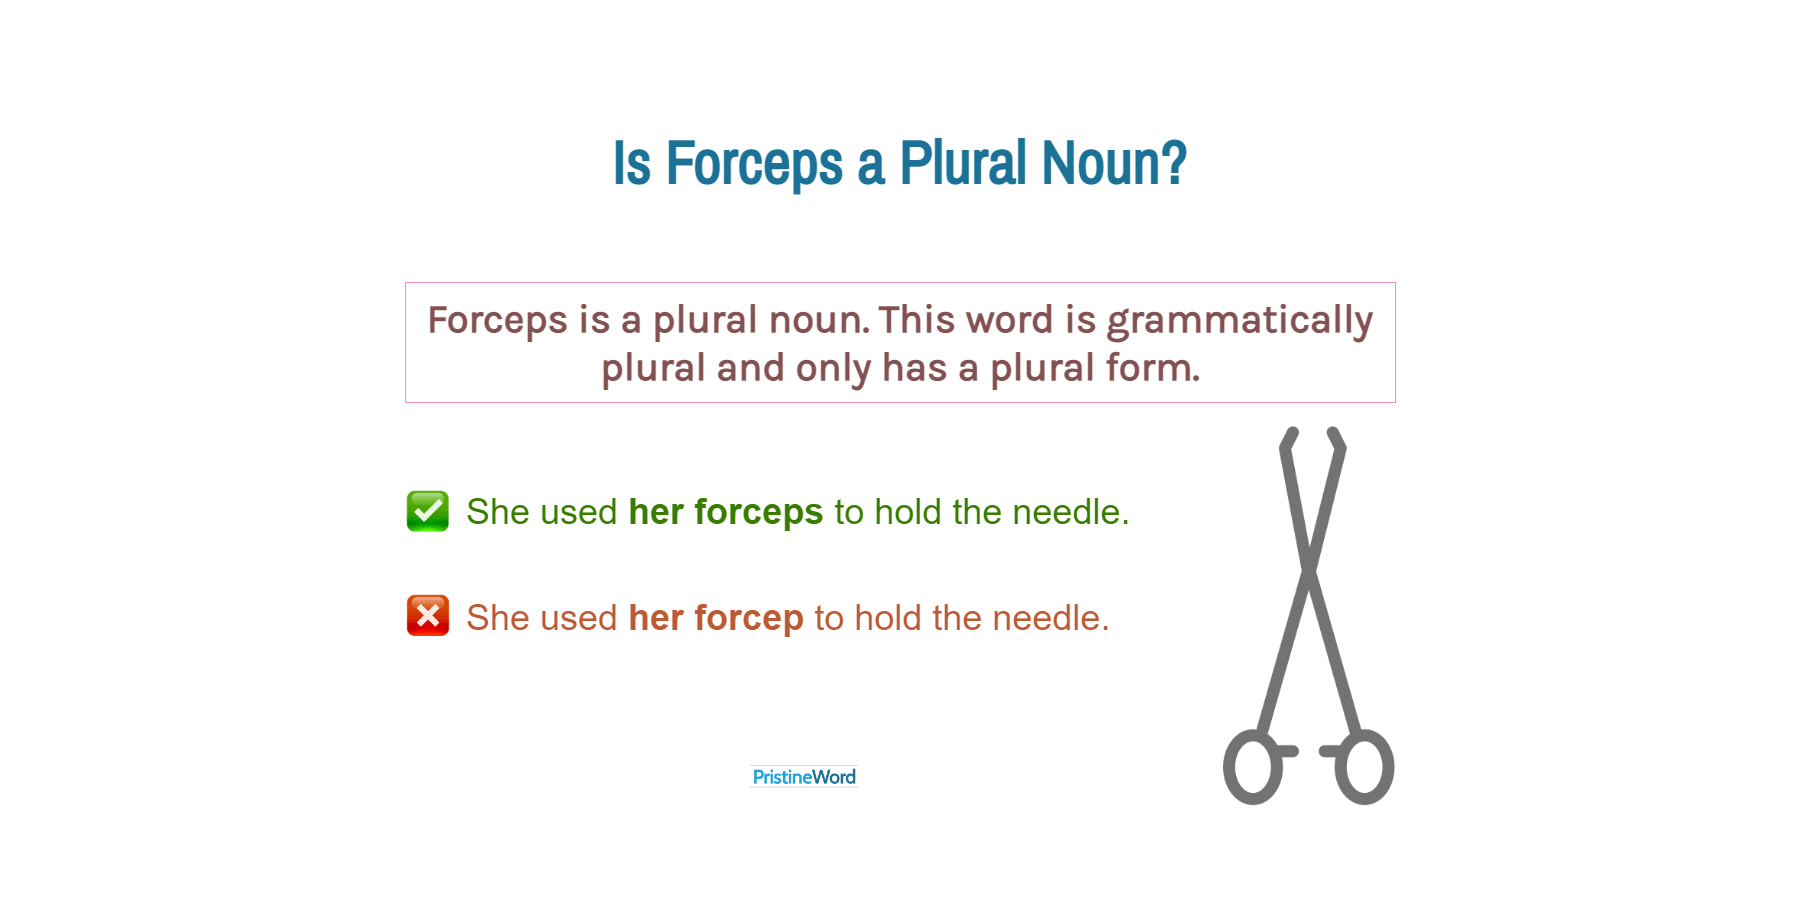 Is Forceps a Plural Noun?